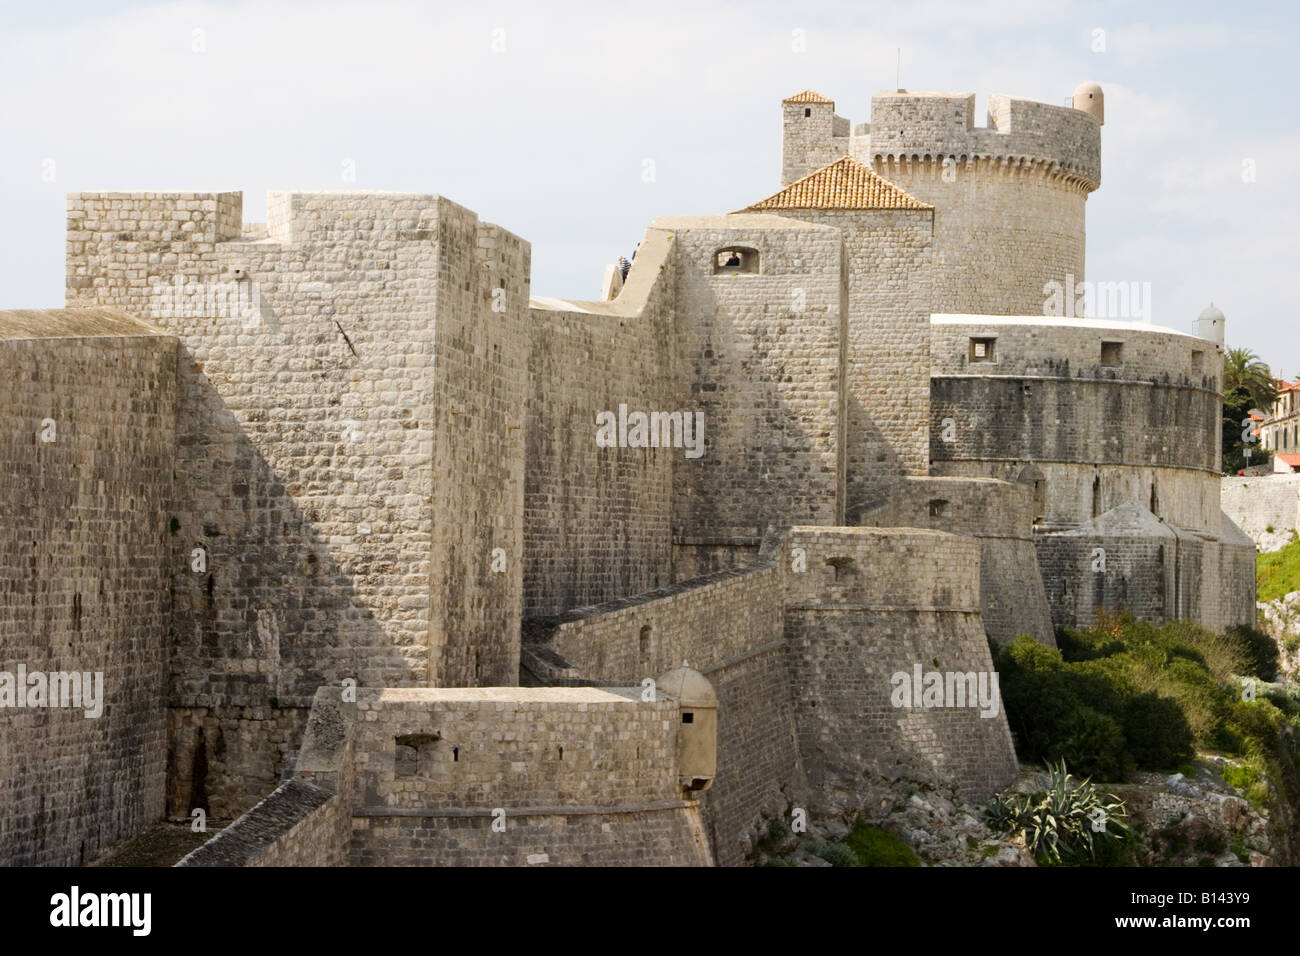 City walls of old Dubrovnik city Croatia Stock Photo